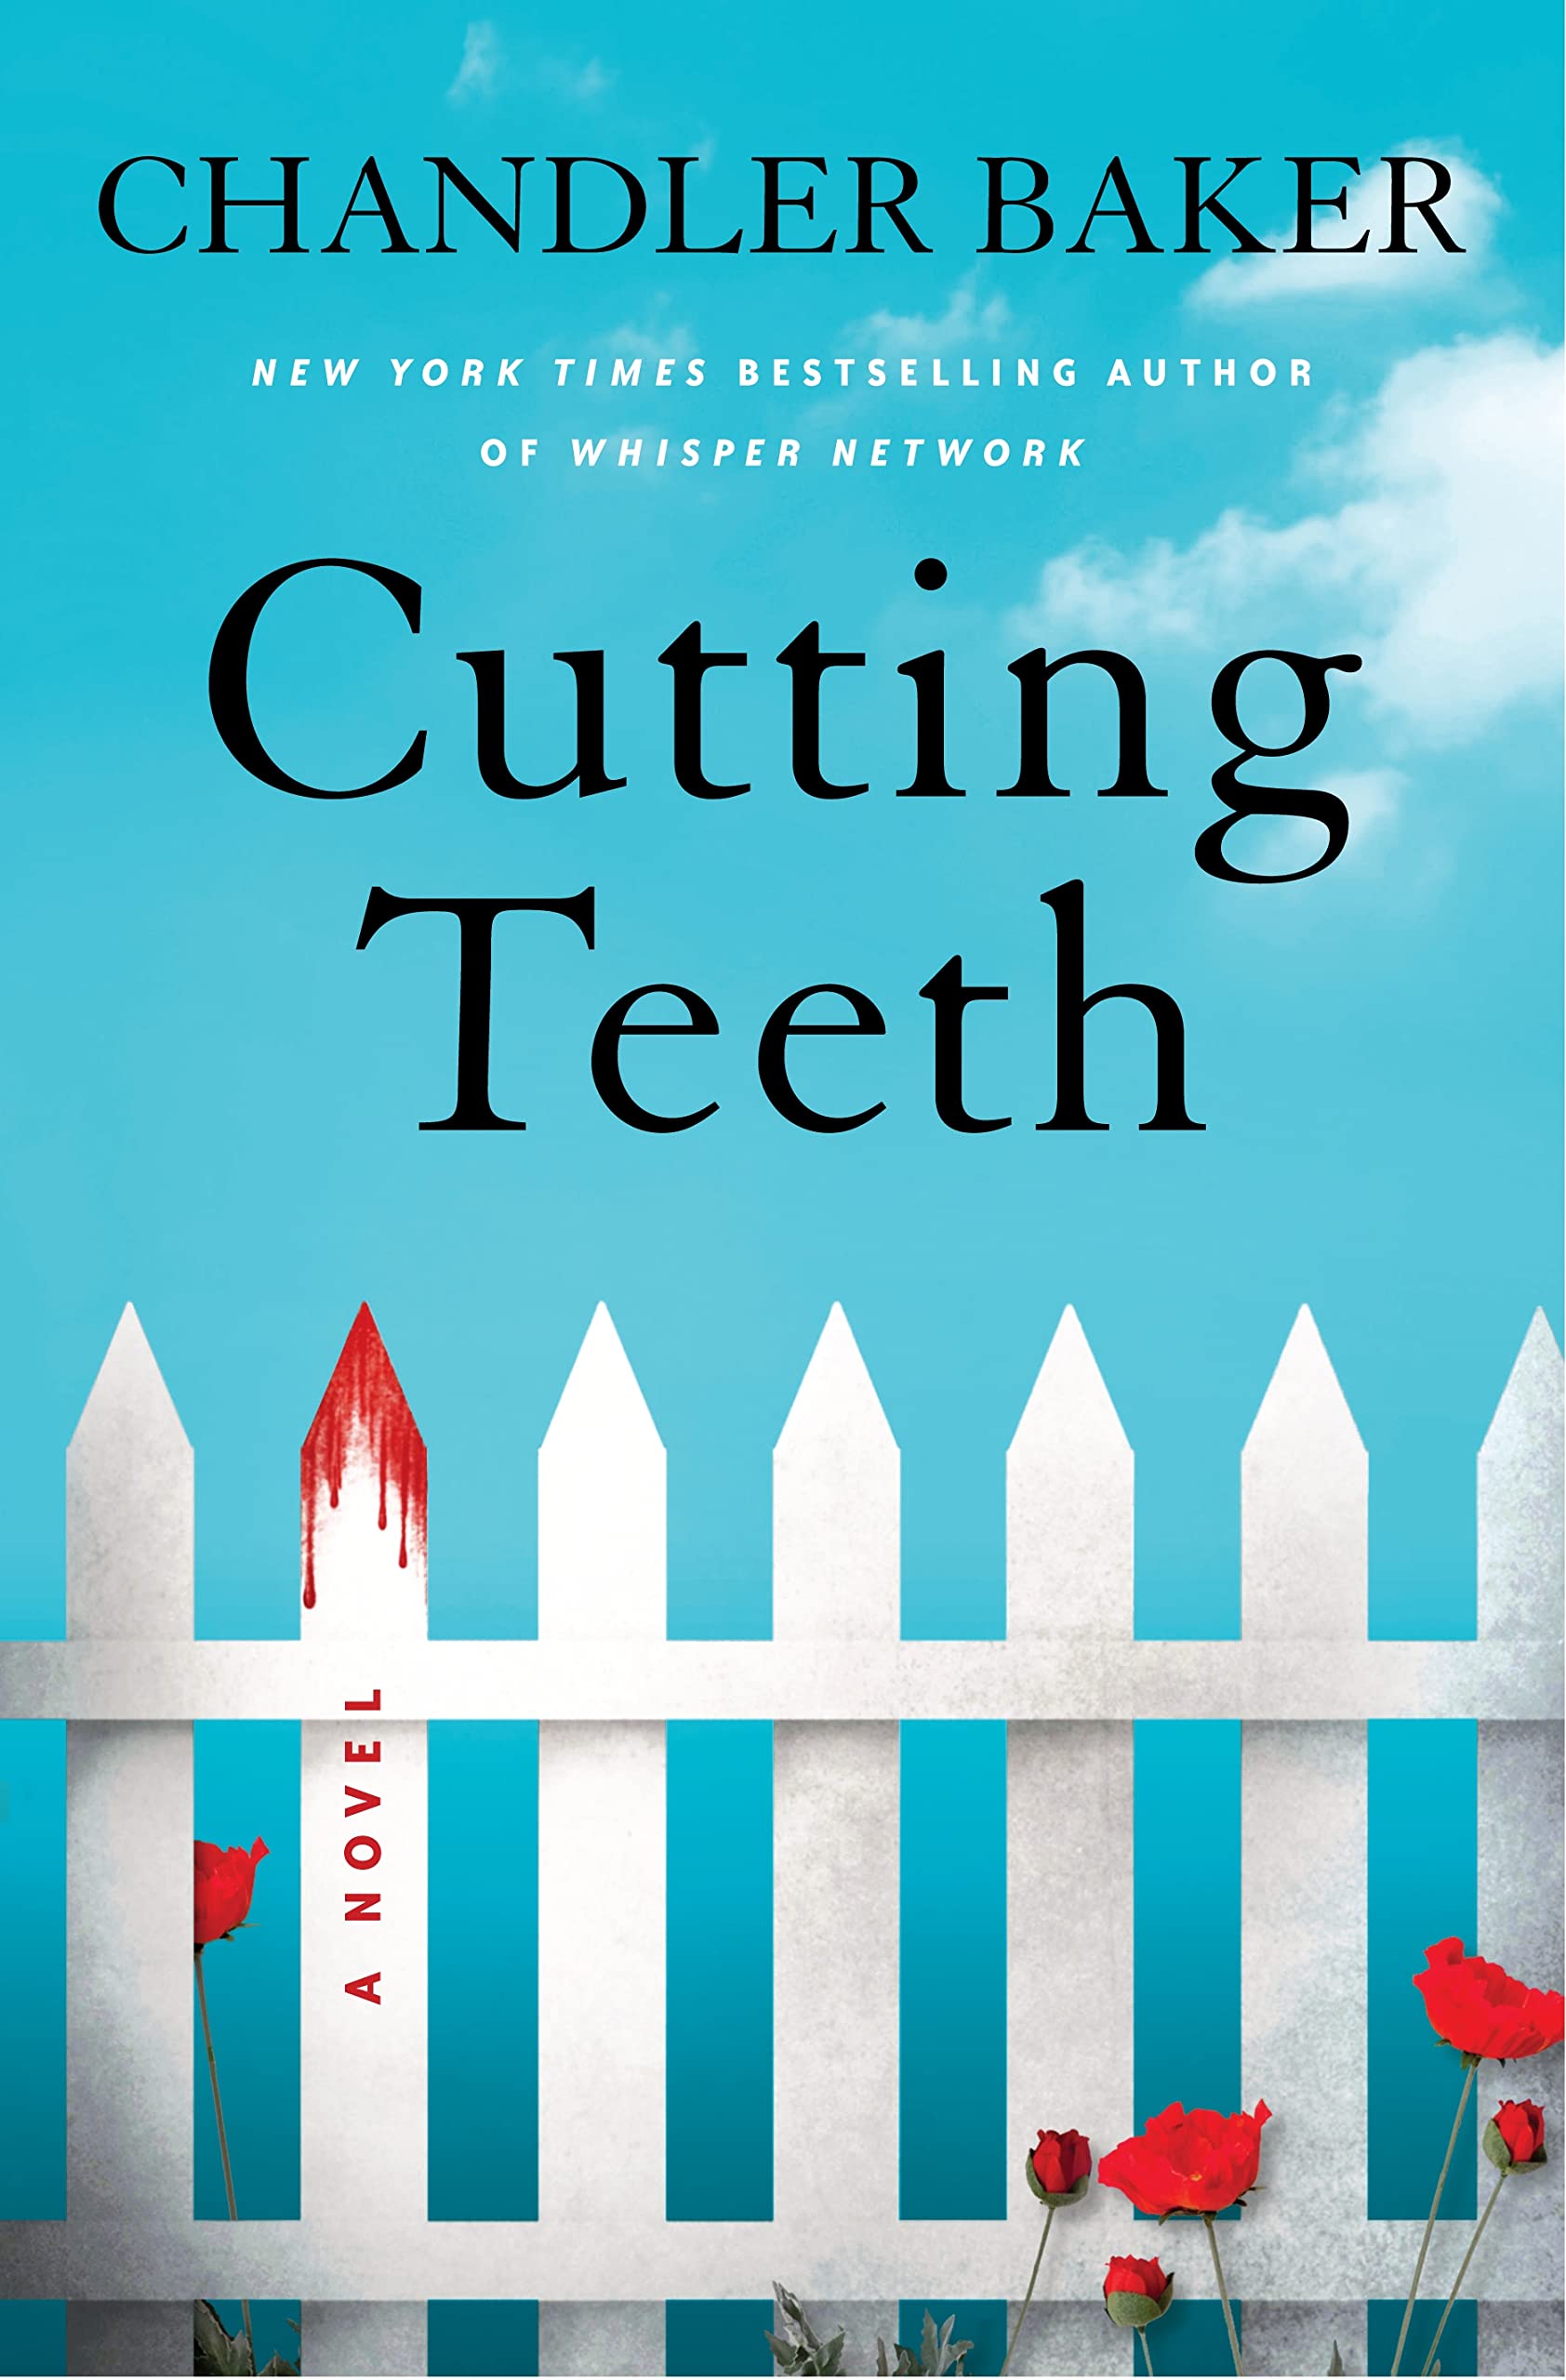 Image for "Cutting Teeth"